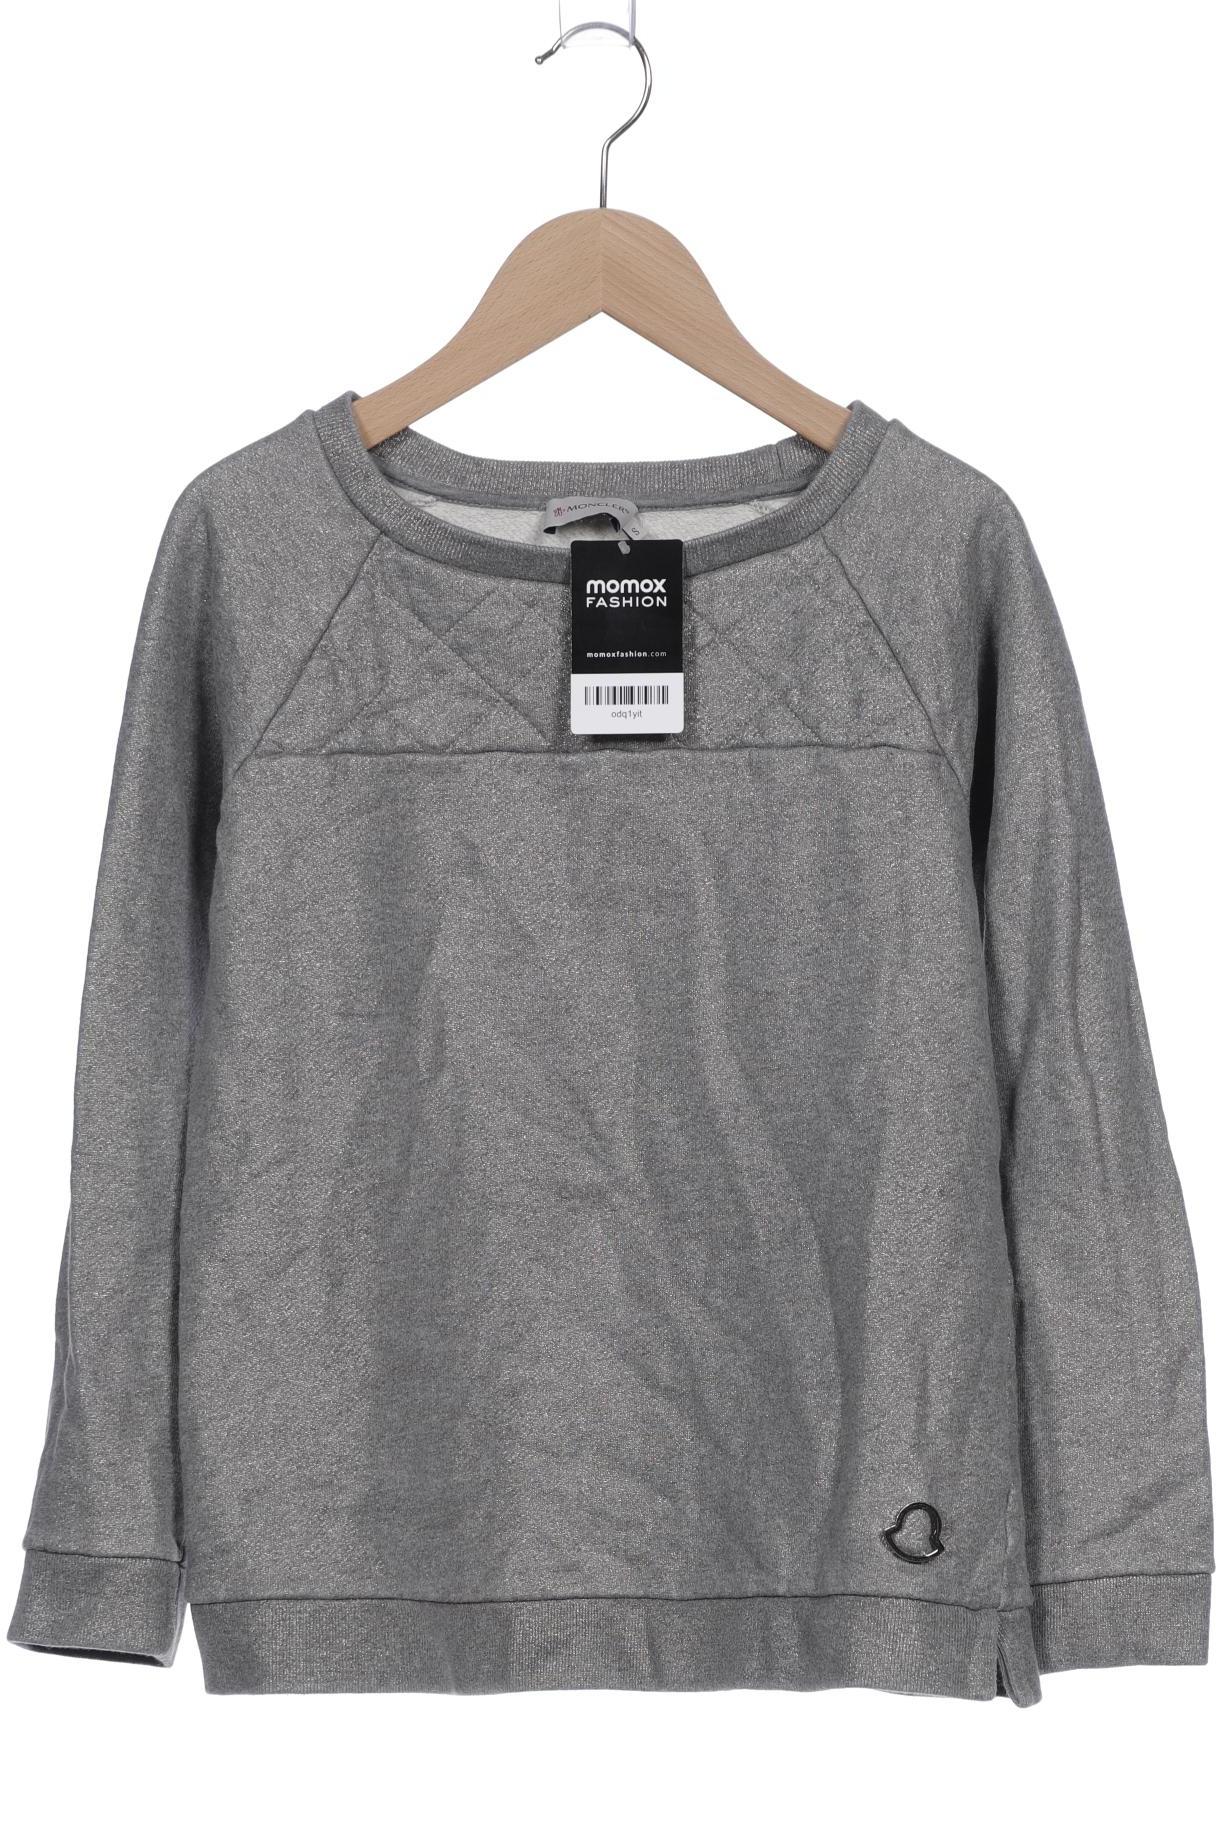 Moncler Damen Sweatshirt, grau, Gr. 36 von Moncler